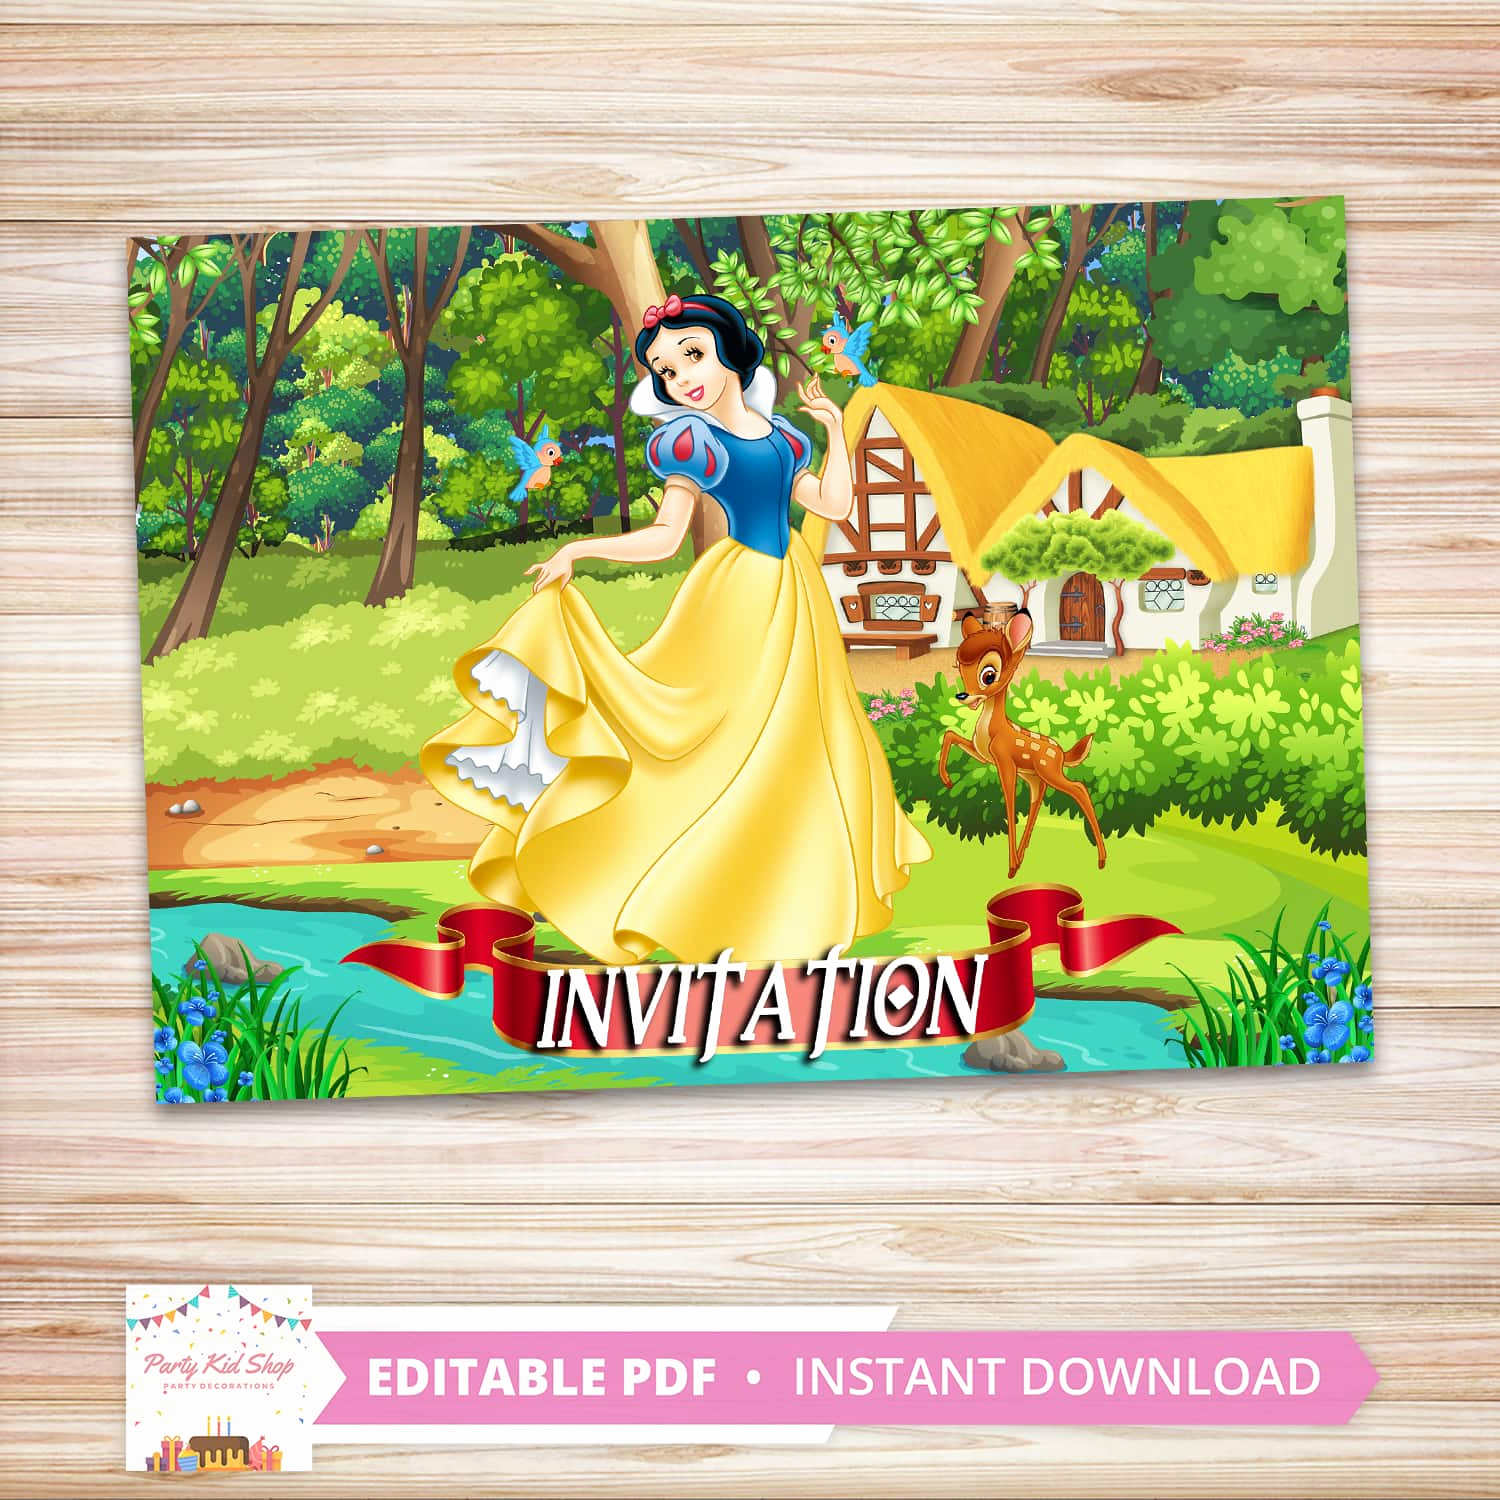 Snow White Invitation Template Luxury Snow White Invitations Diy Editable Pdf Partykidshop